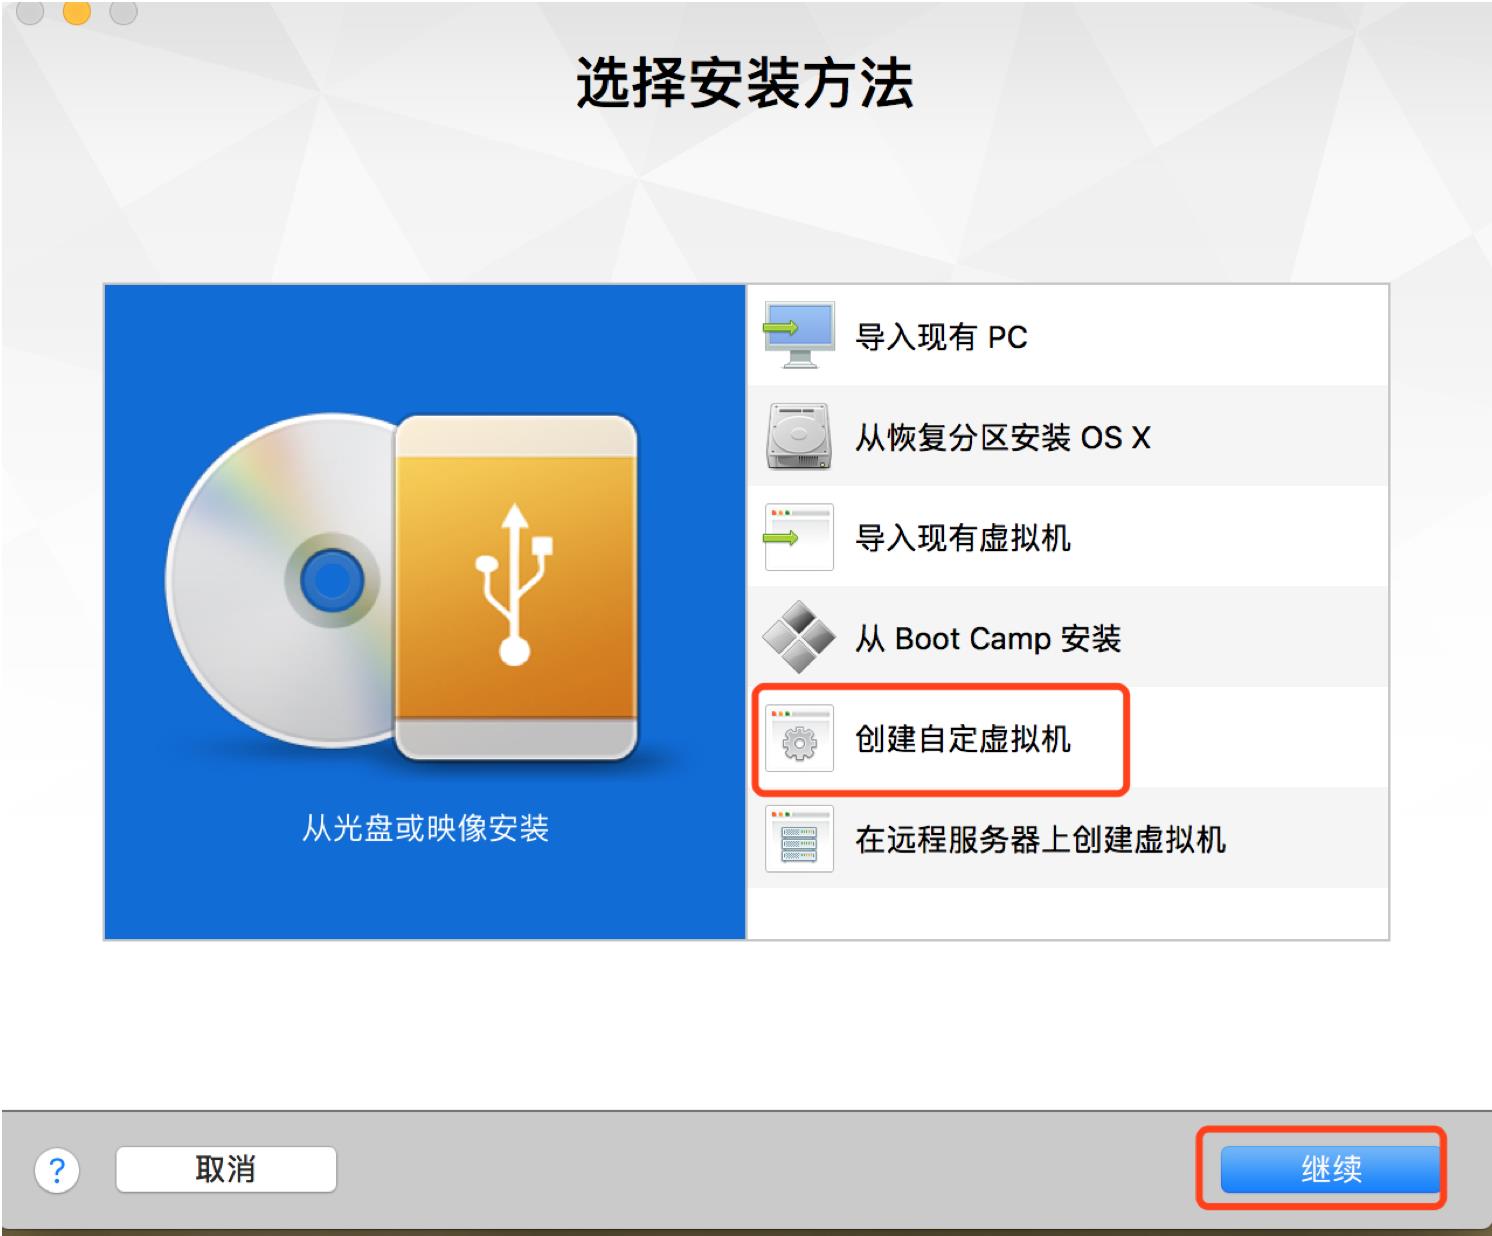 Mac下通过VMware Fusion安装centos虚拟机操作记录 - 文章图片